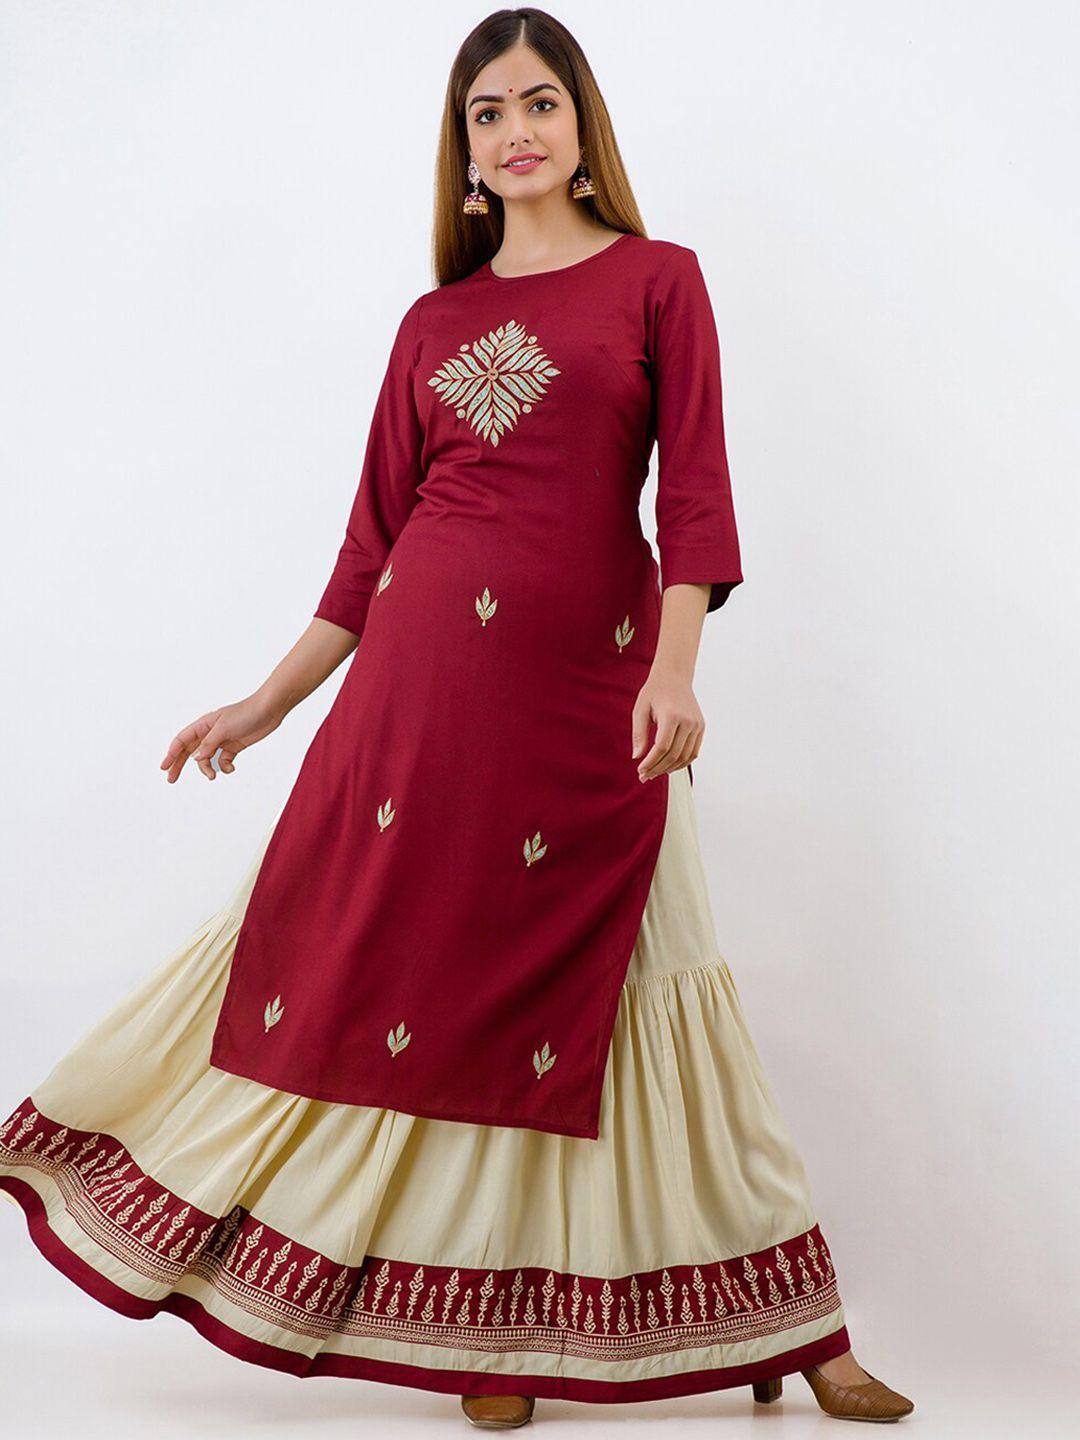 sky-shoppie-women-maroon-ethnic-motifs-embroidered-thread-work-kurta-with-skirt-with-dupatta